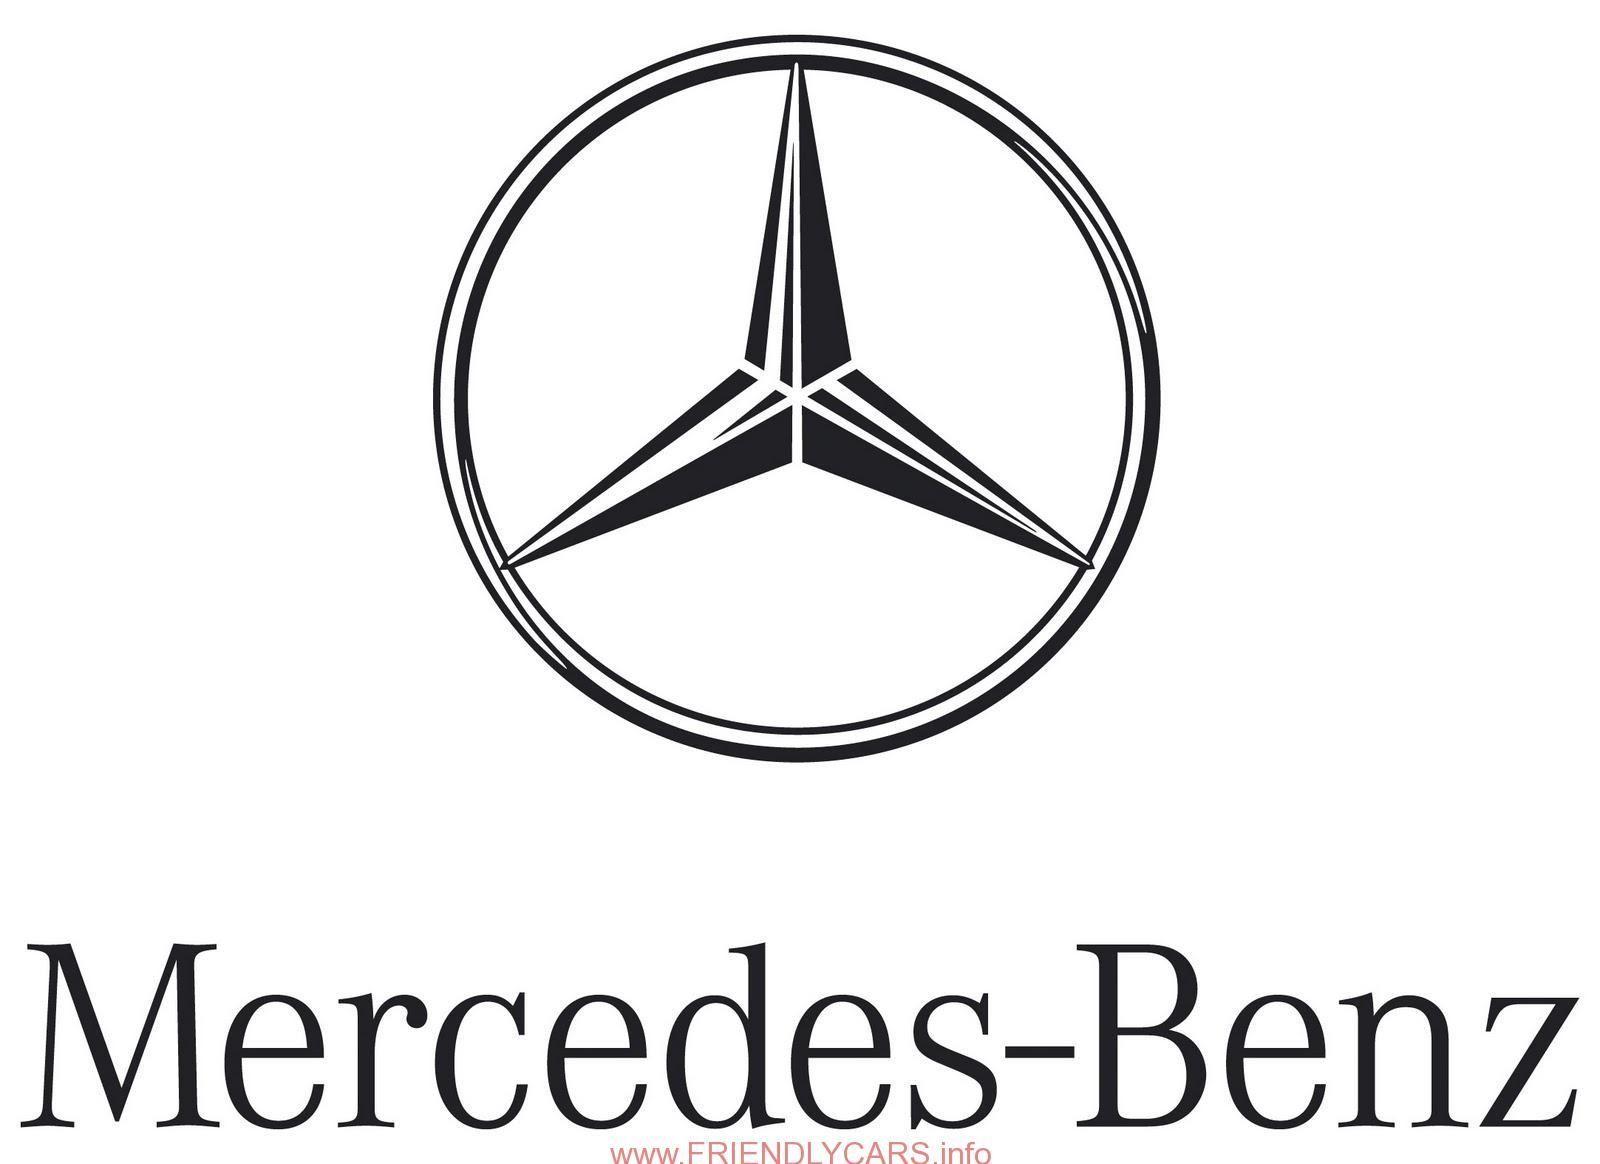 awesome mercedes logo vector car image HD Mercedes Logo Wallpaper